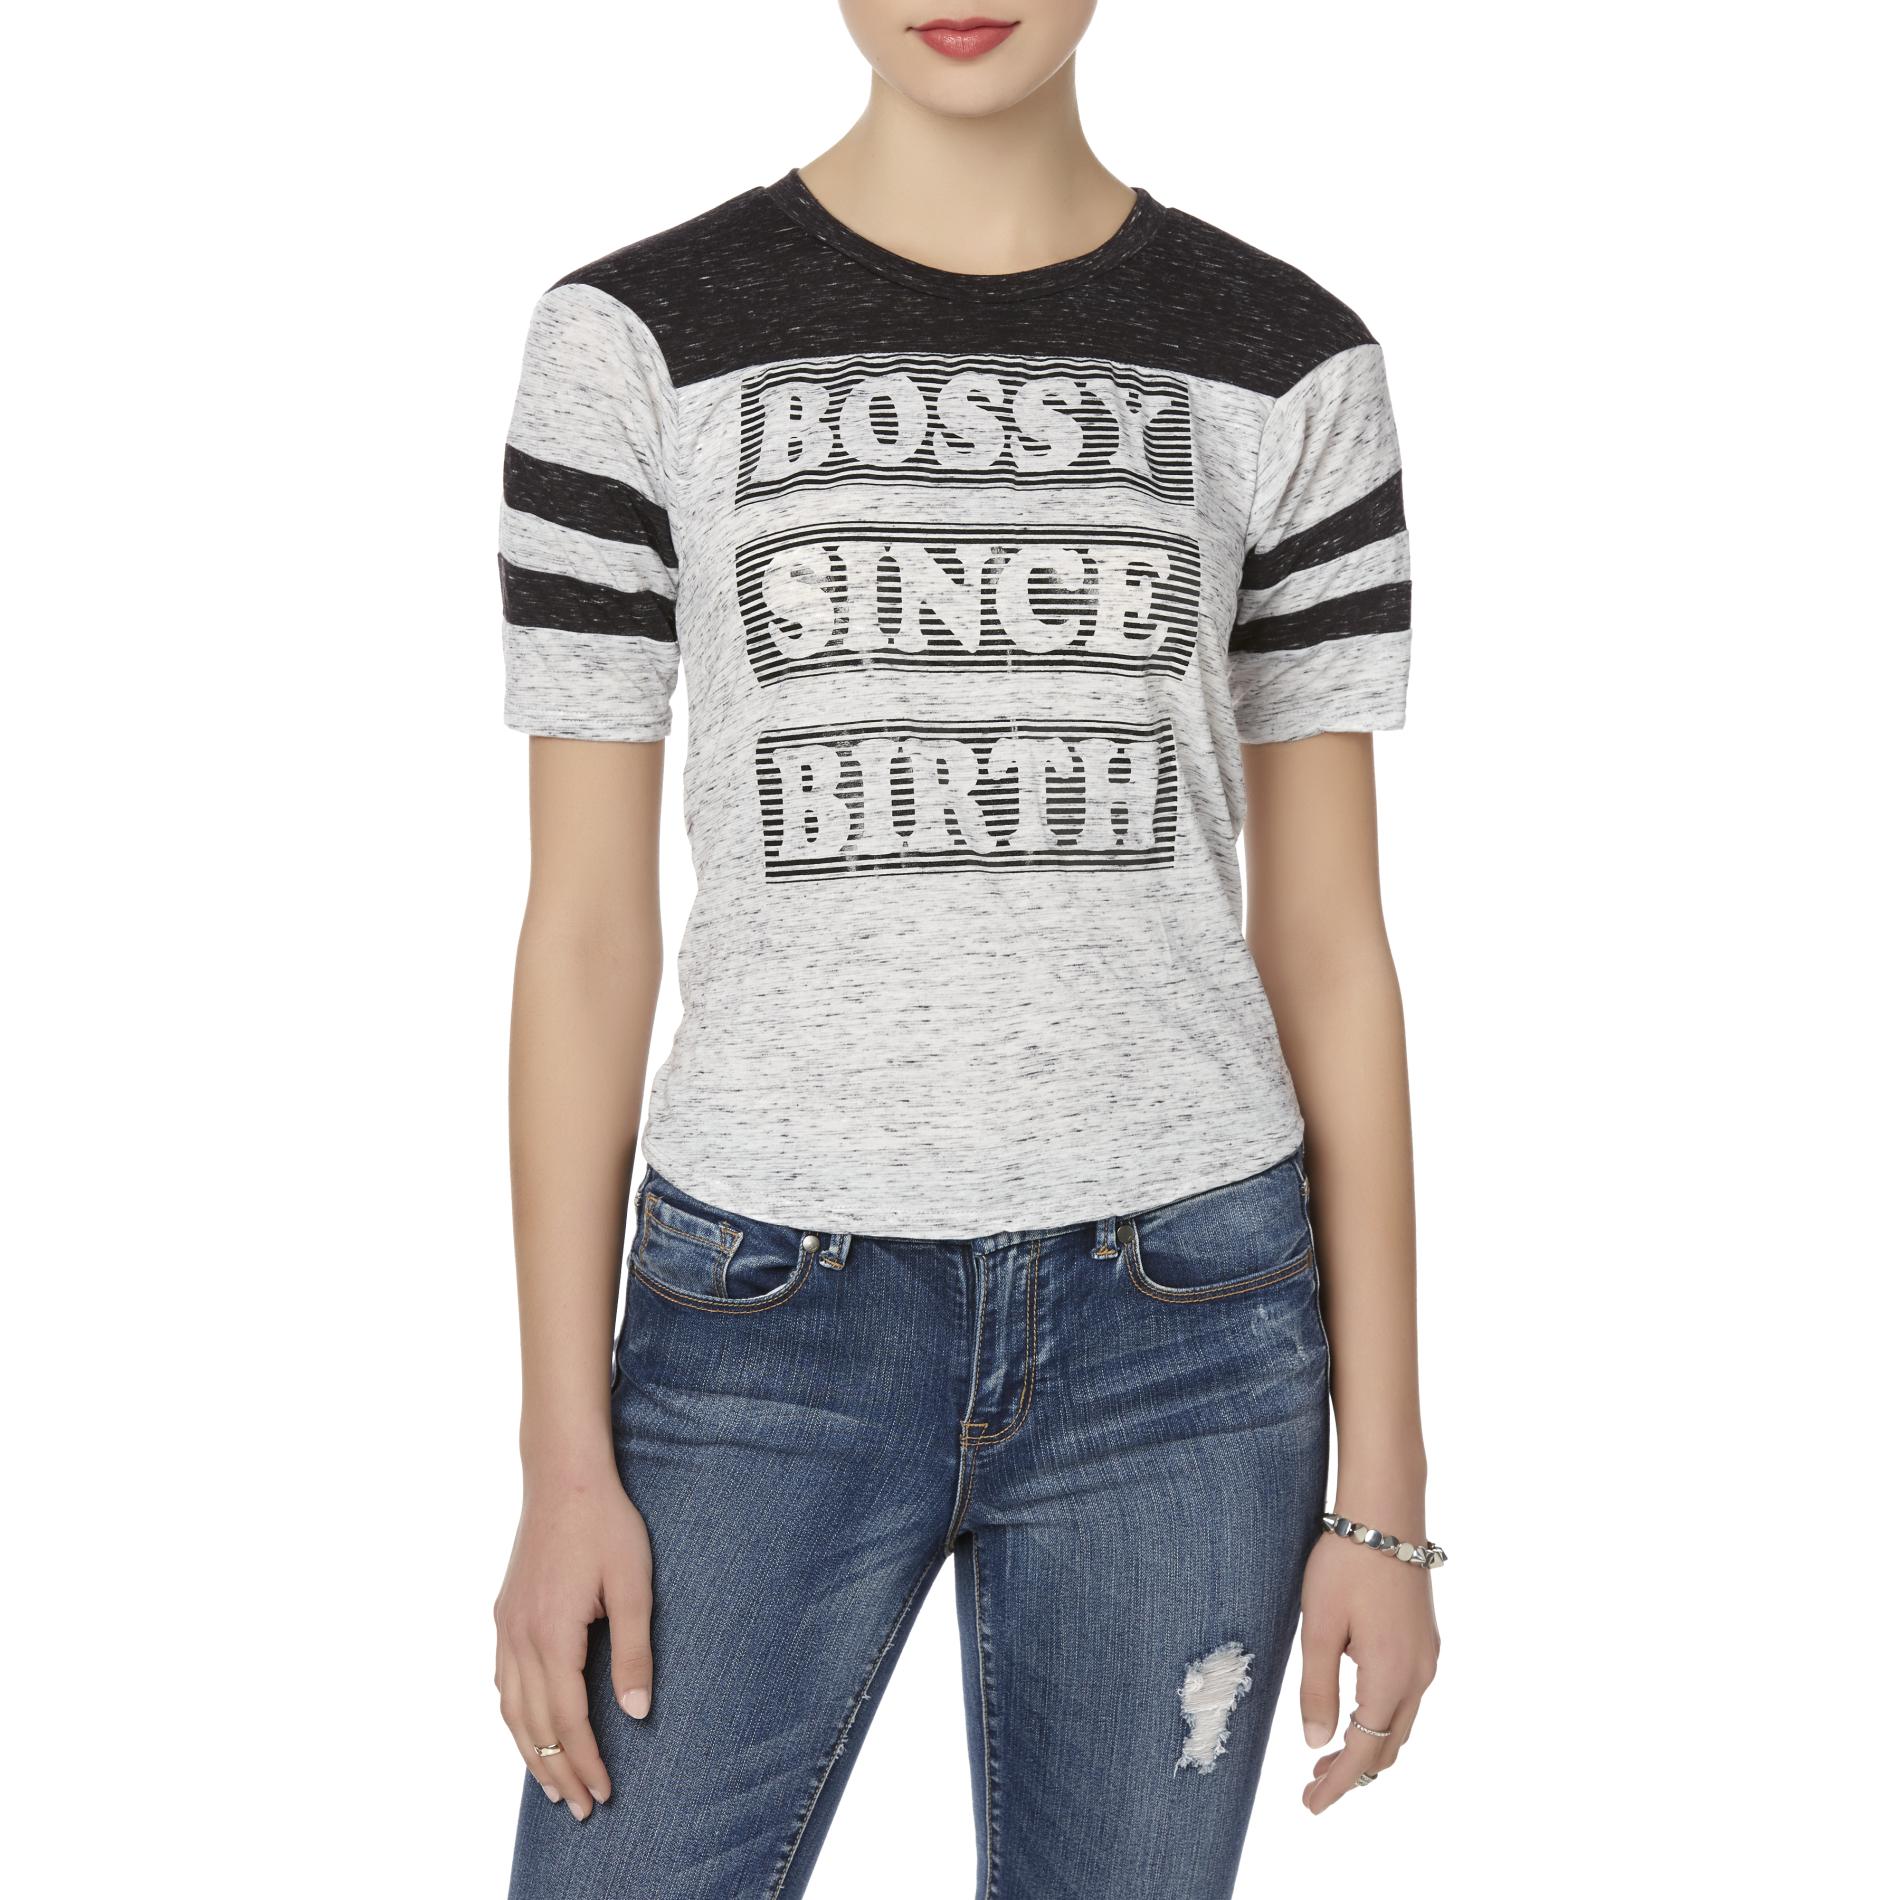 Joe Boxer Juniors' Football Jersey T-Shirt - Bossy Since Birth